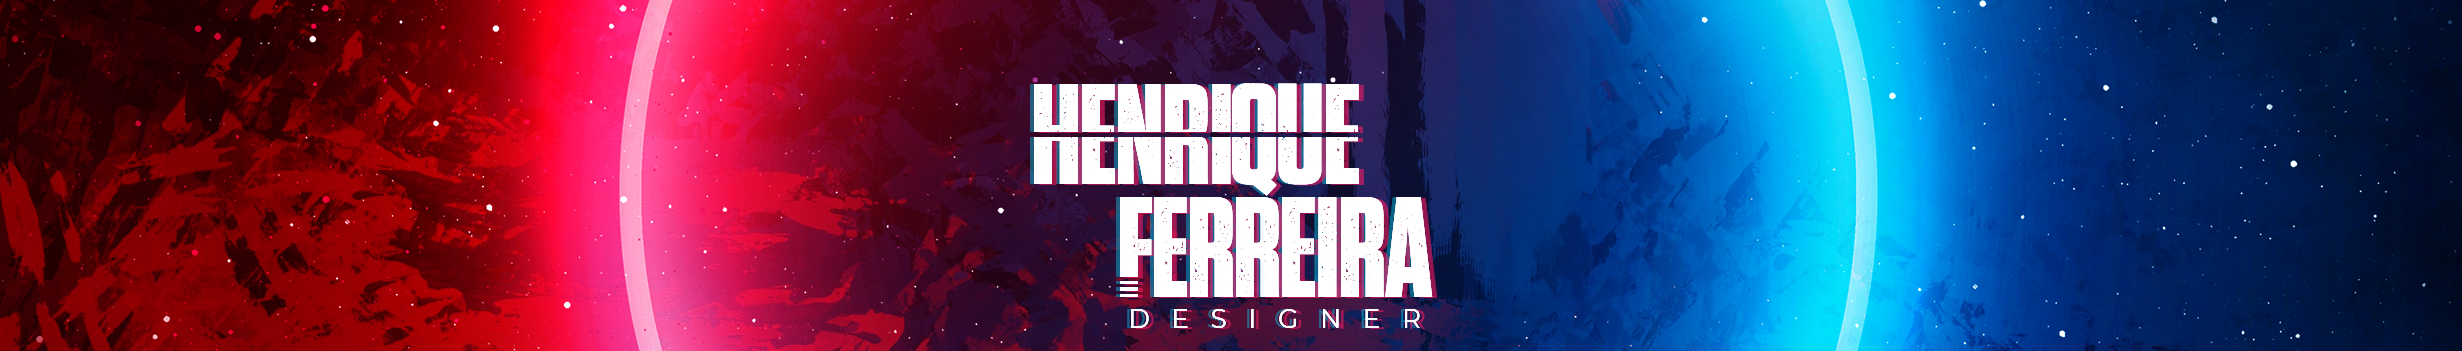 Henrique Ferreira profil başlığı